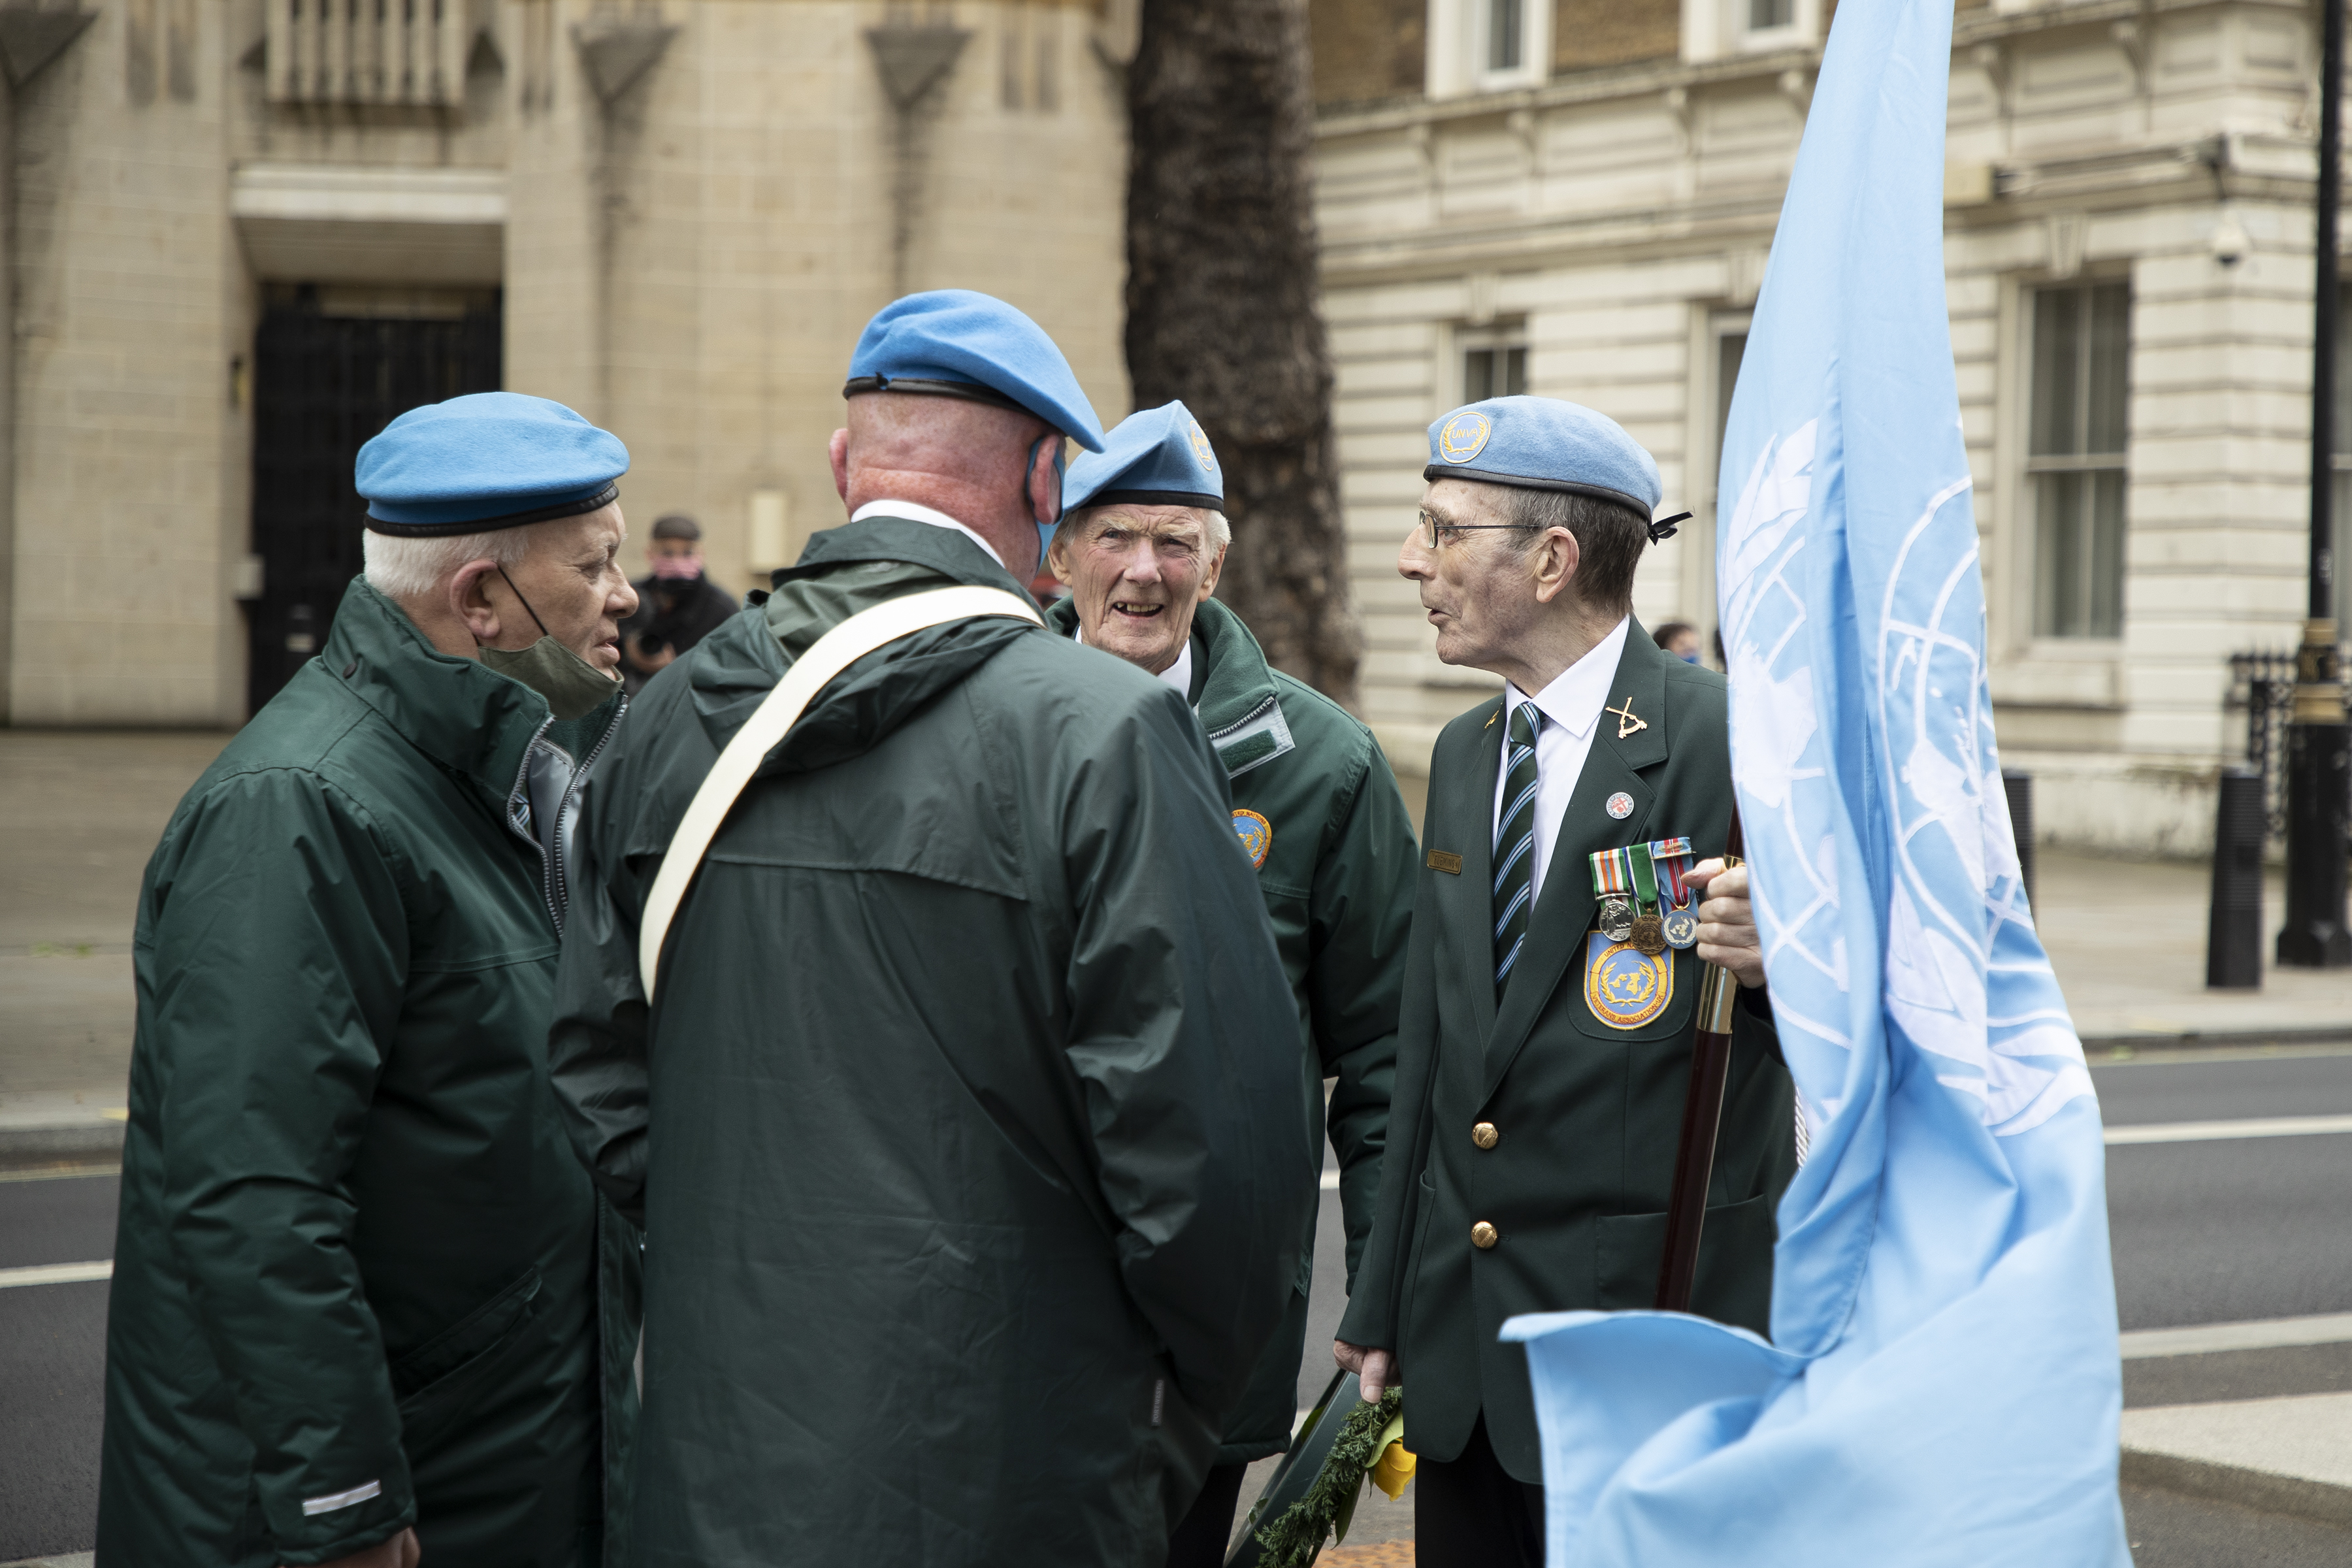 Irish Veterans hold the UN flag